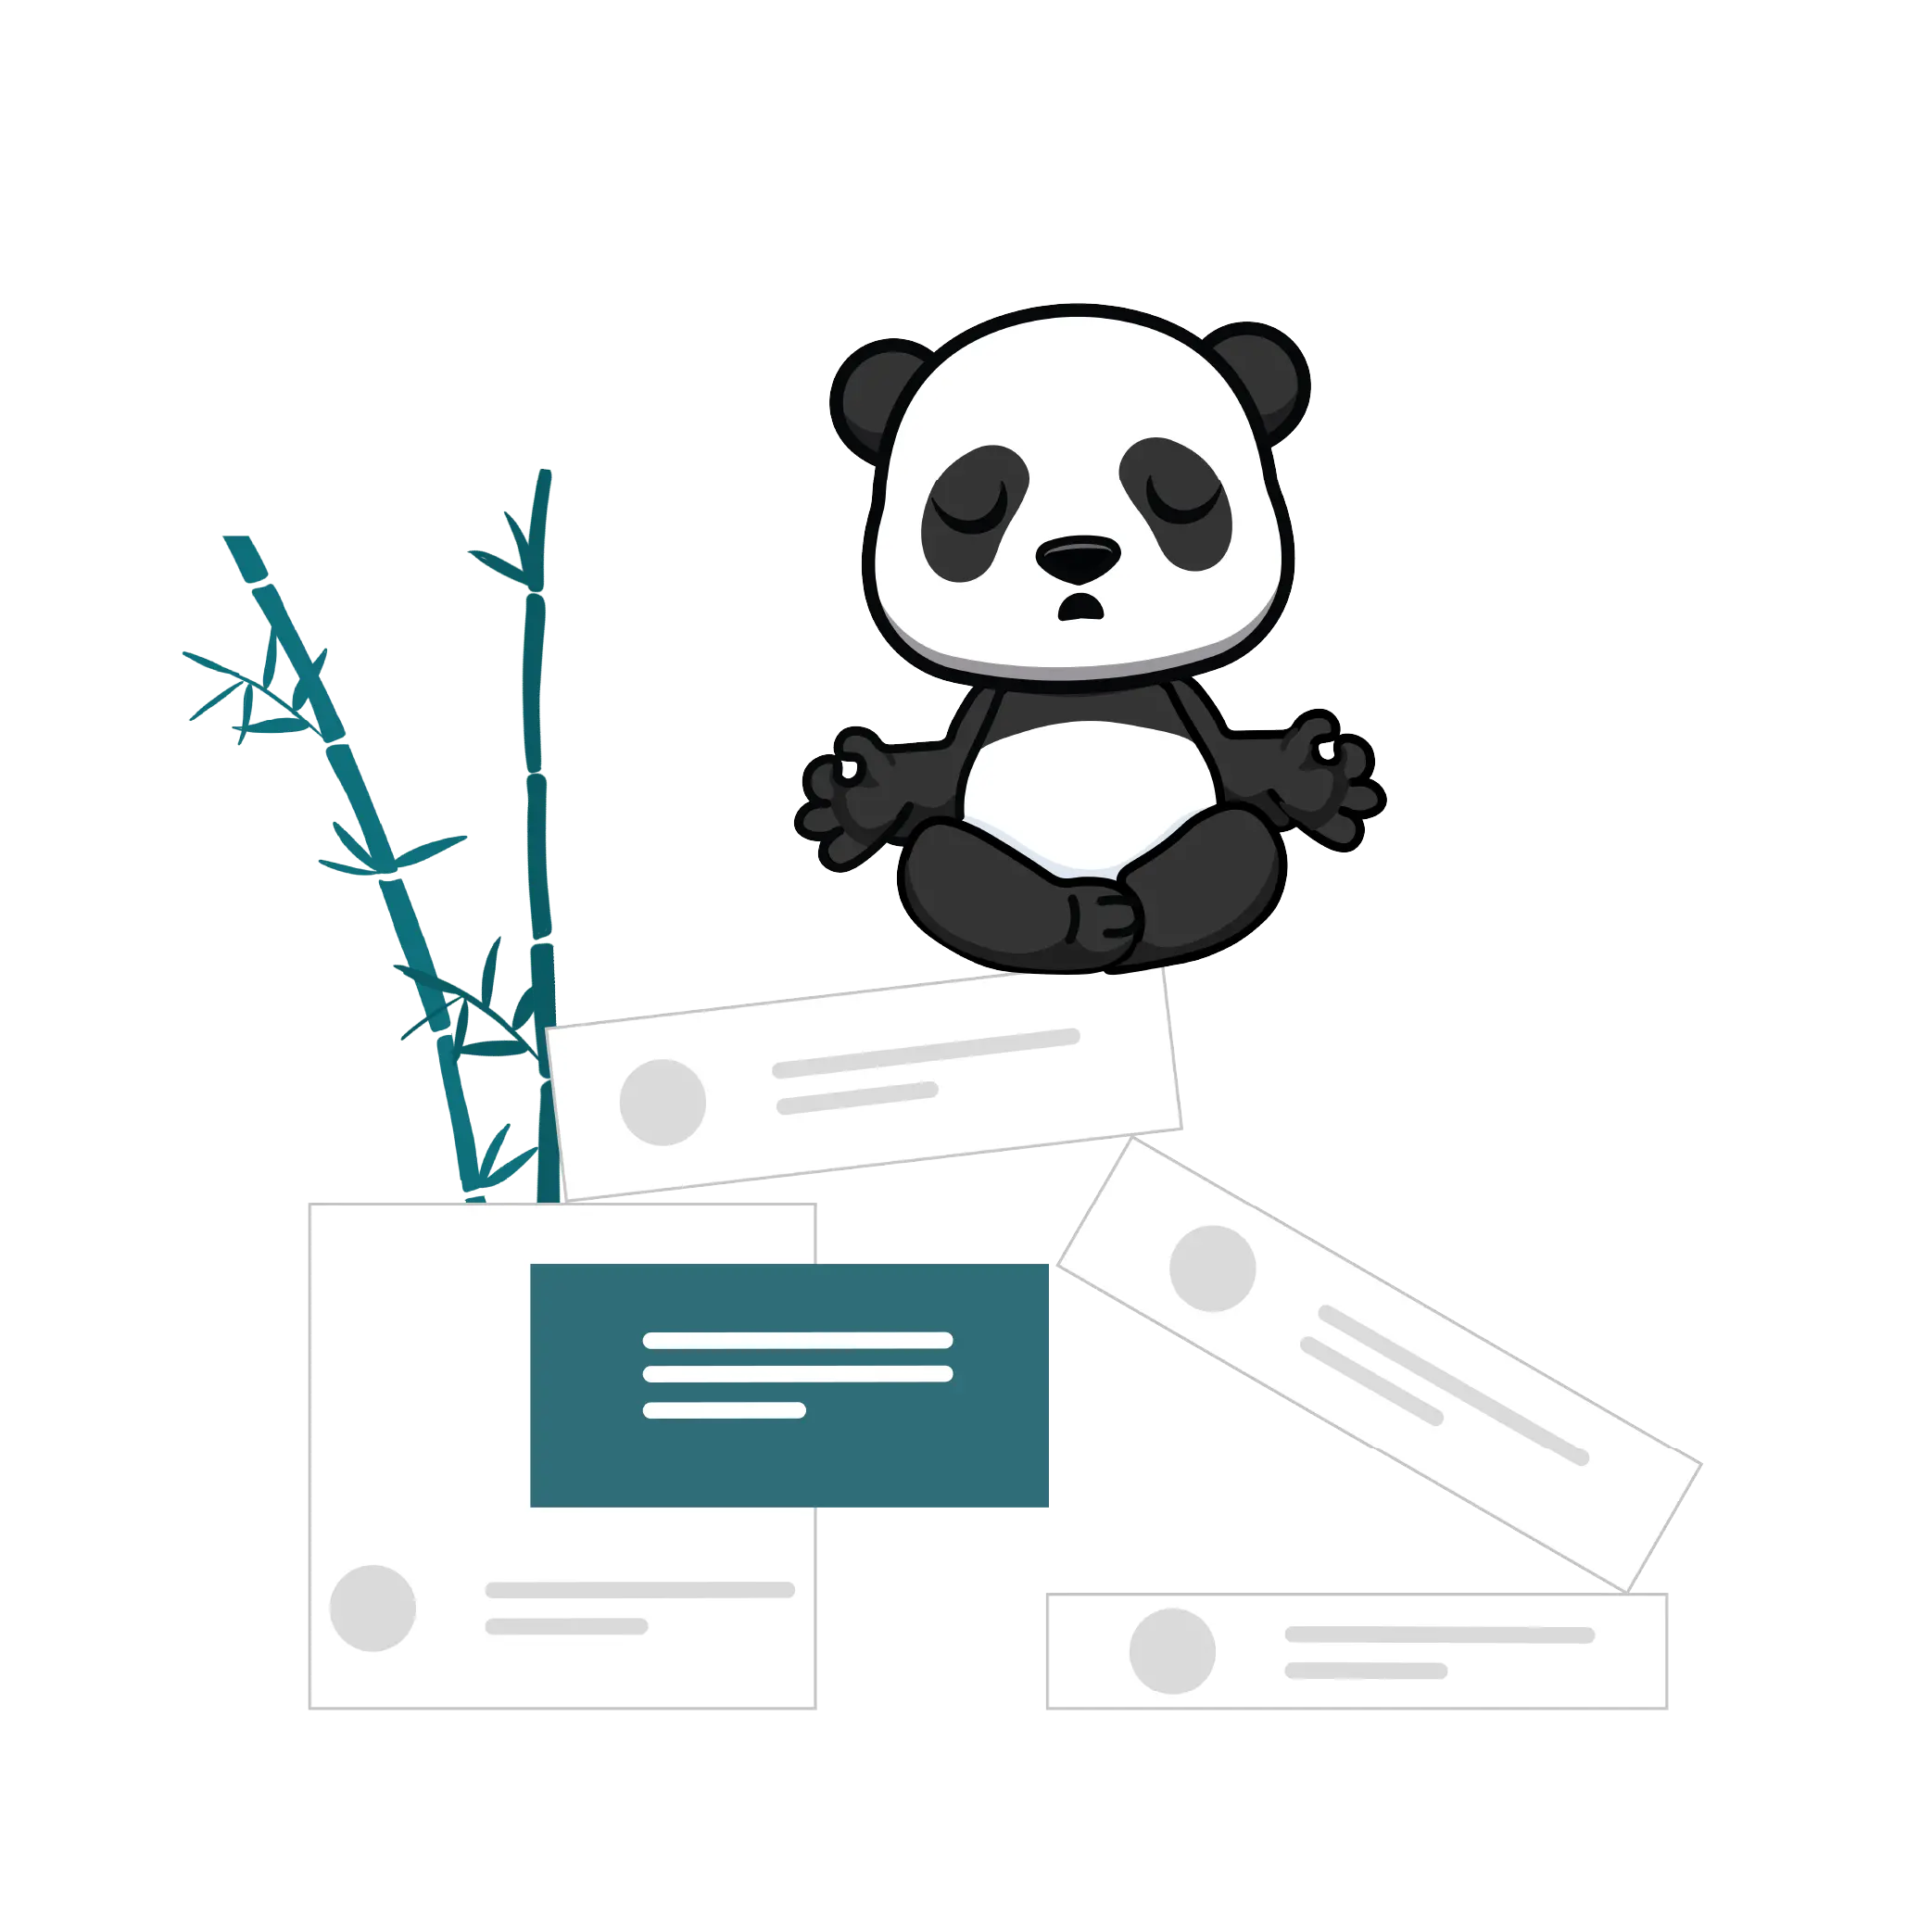 Panda working on influencer marketing